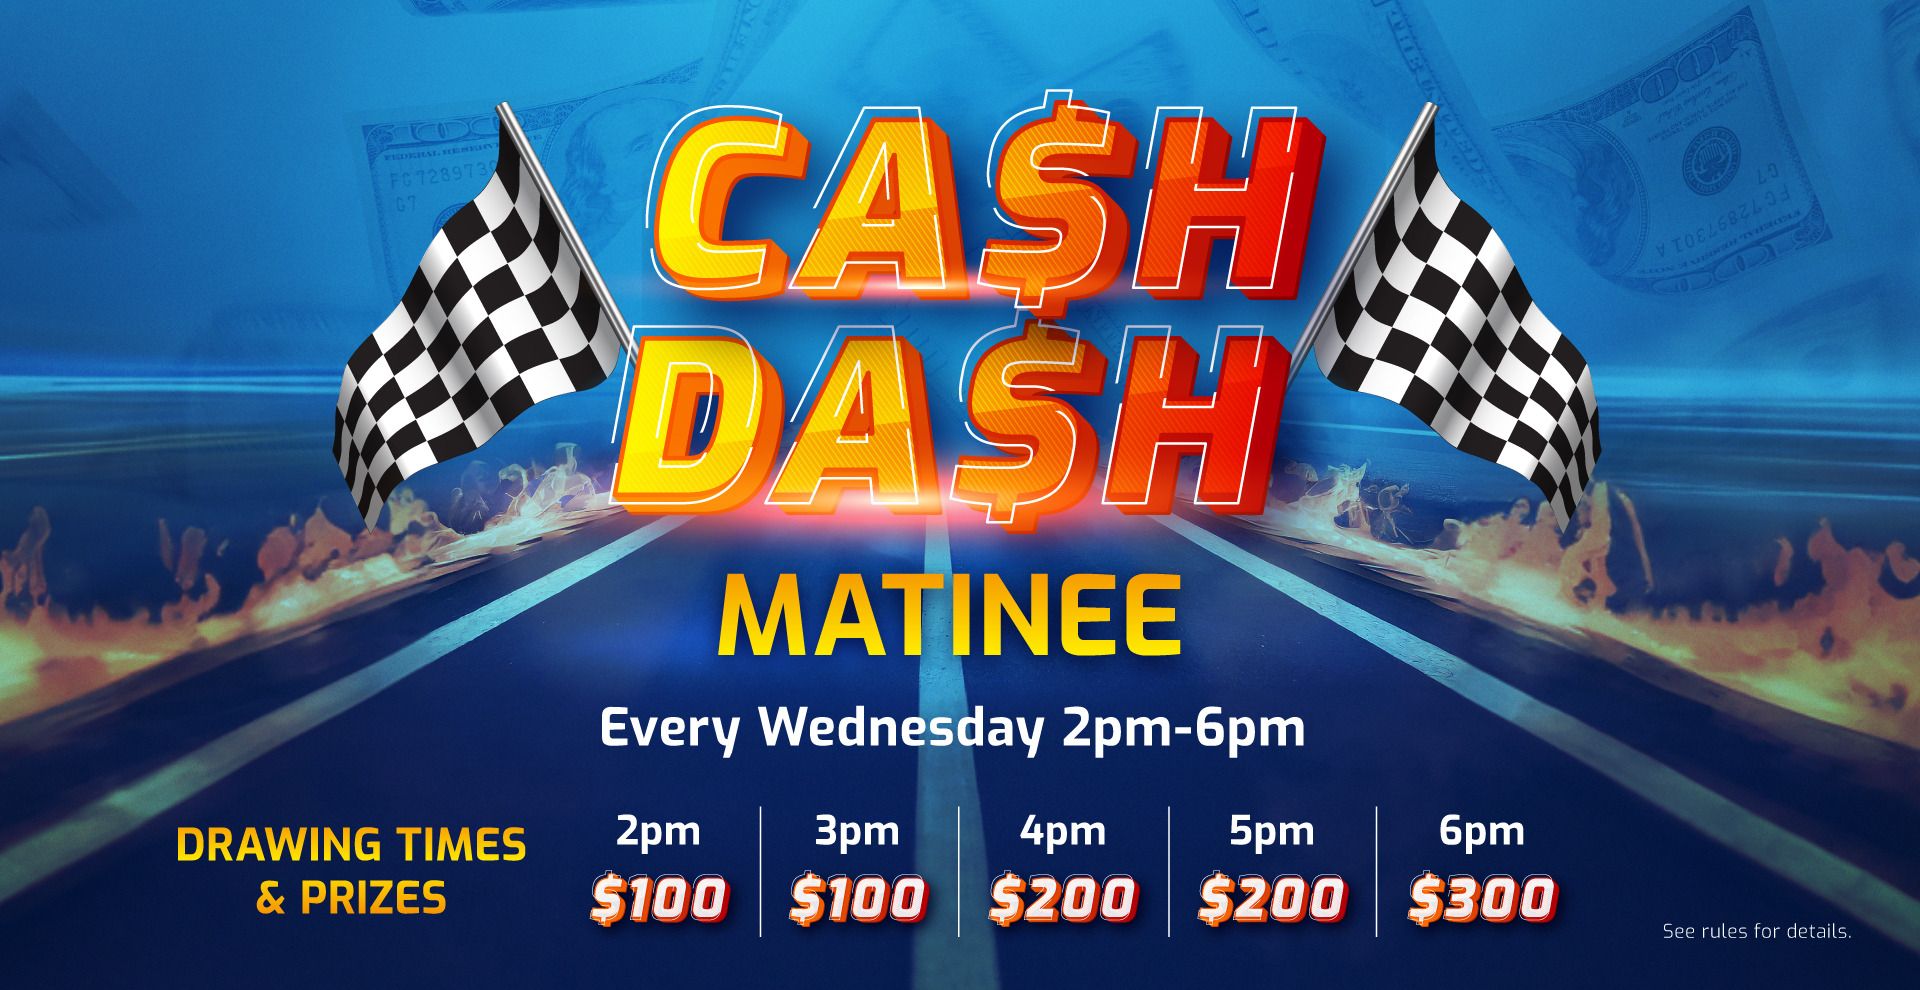 Crazy Moose Casino Mountlake Terrace | Cash Dash Matinee